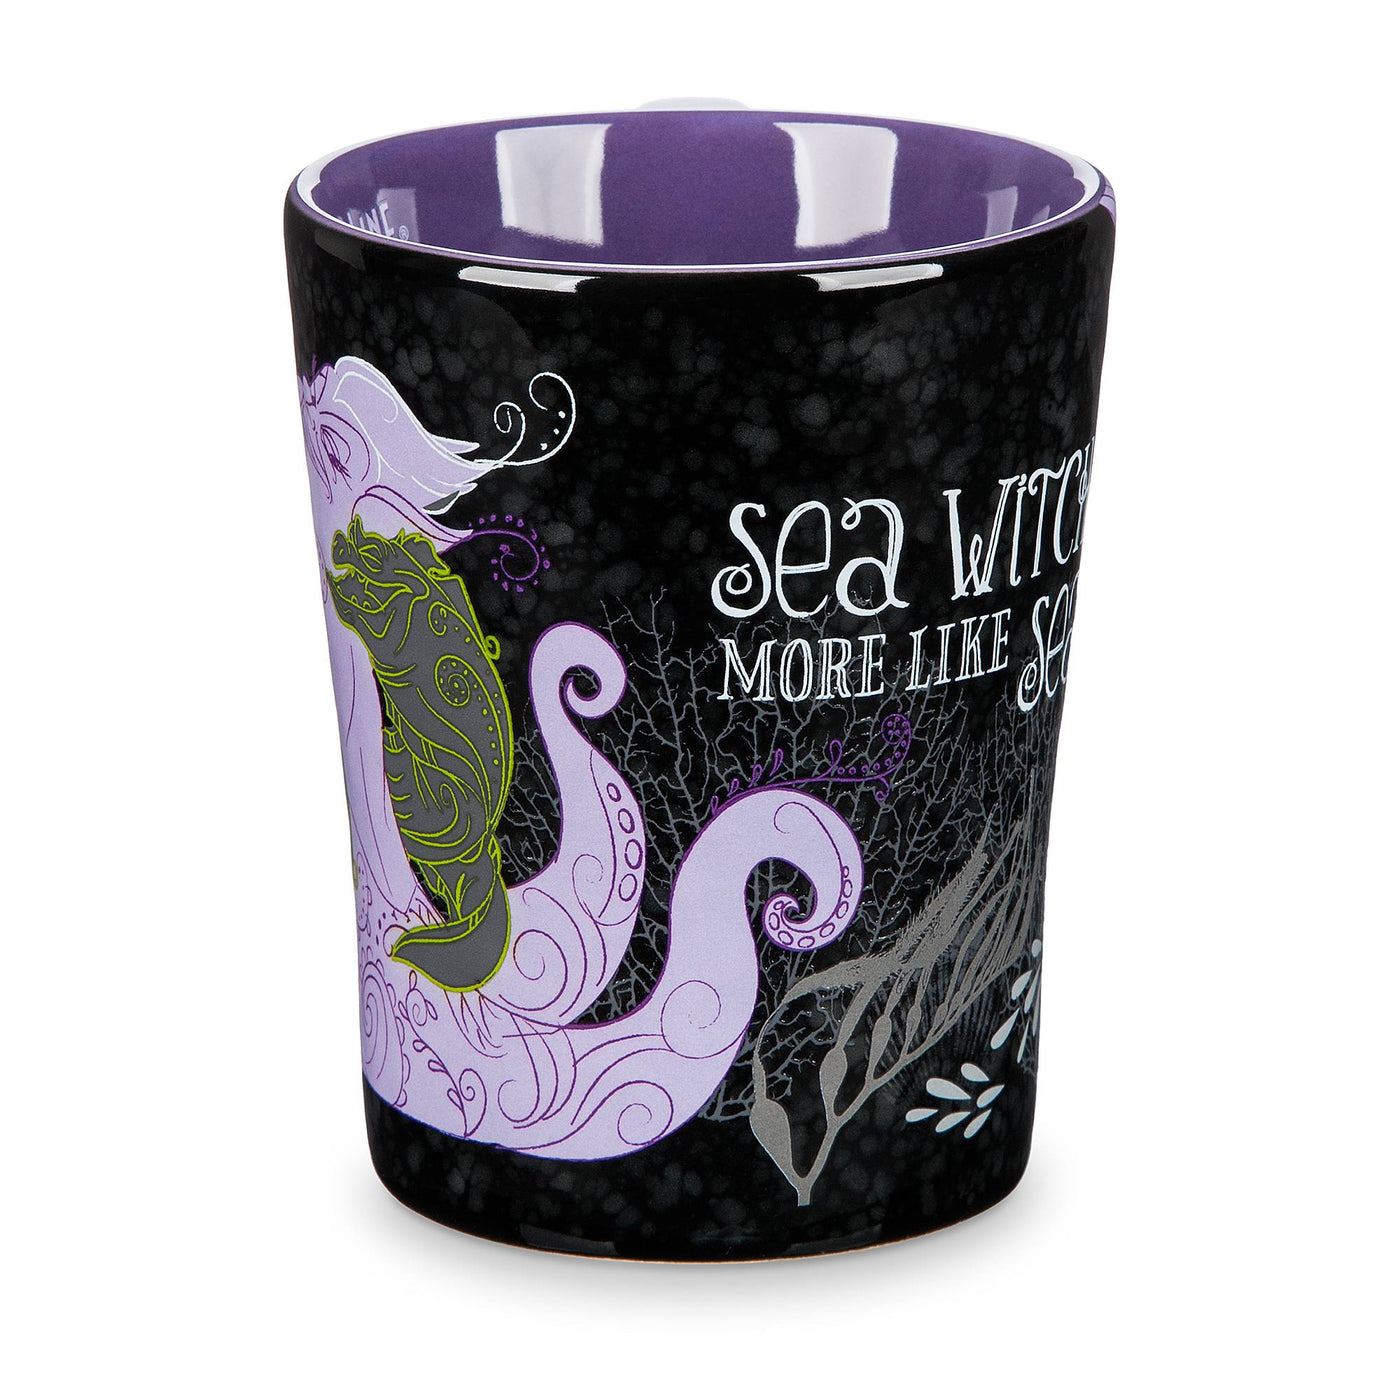 Disney Cruise Line Ursula Sea Witch? More Like Sea Goddess Coffee Mug New